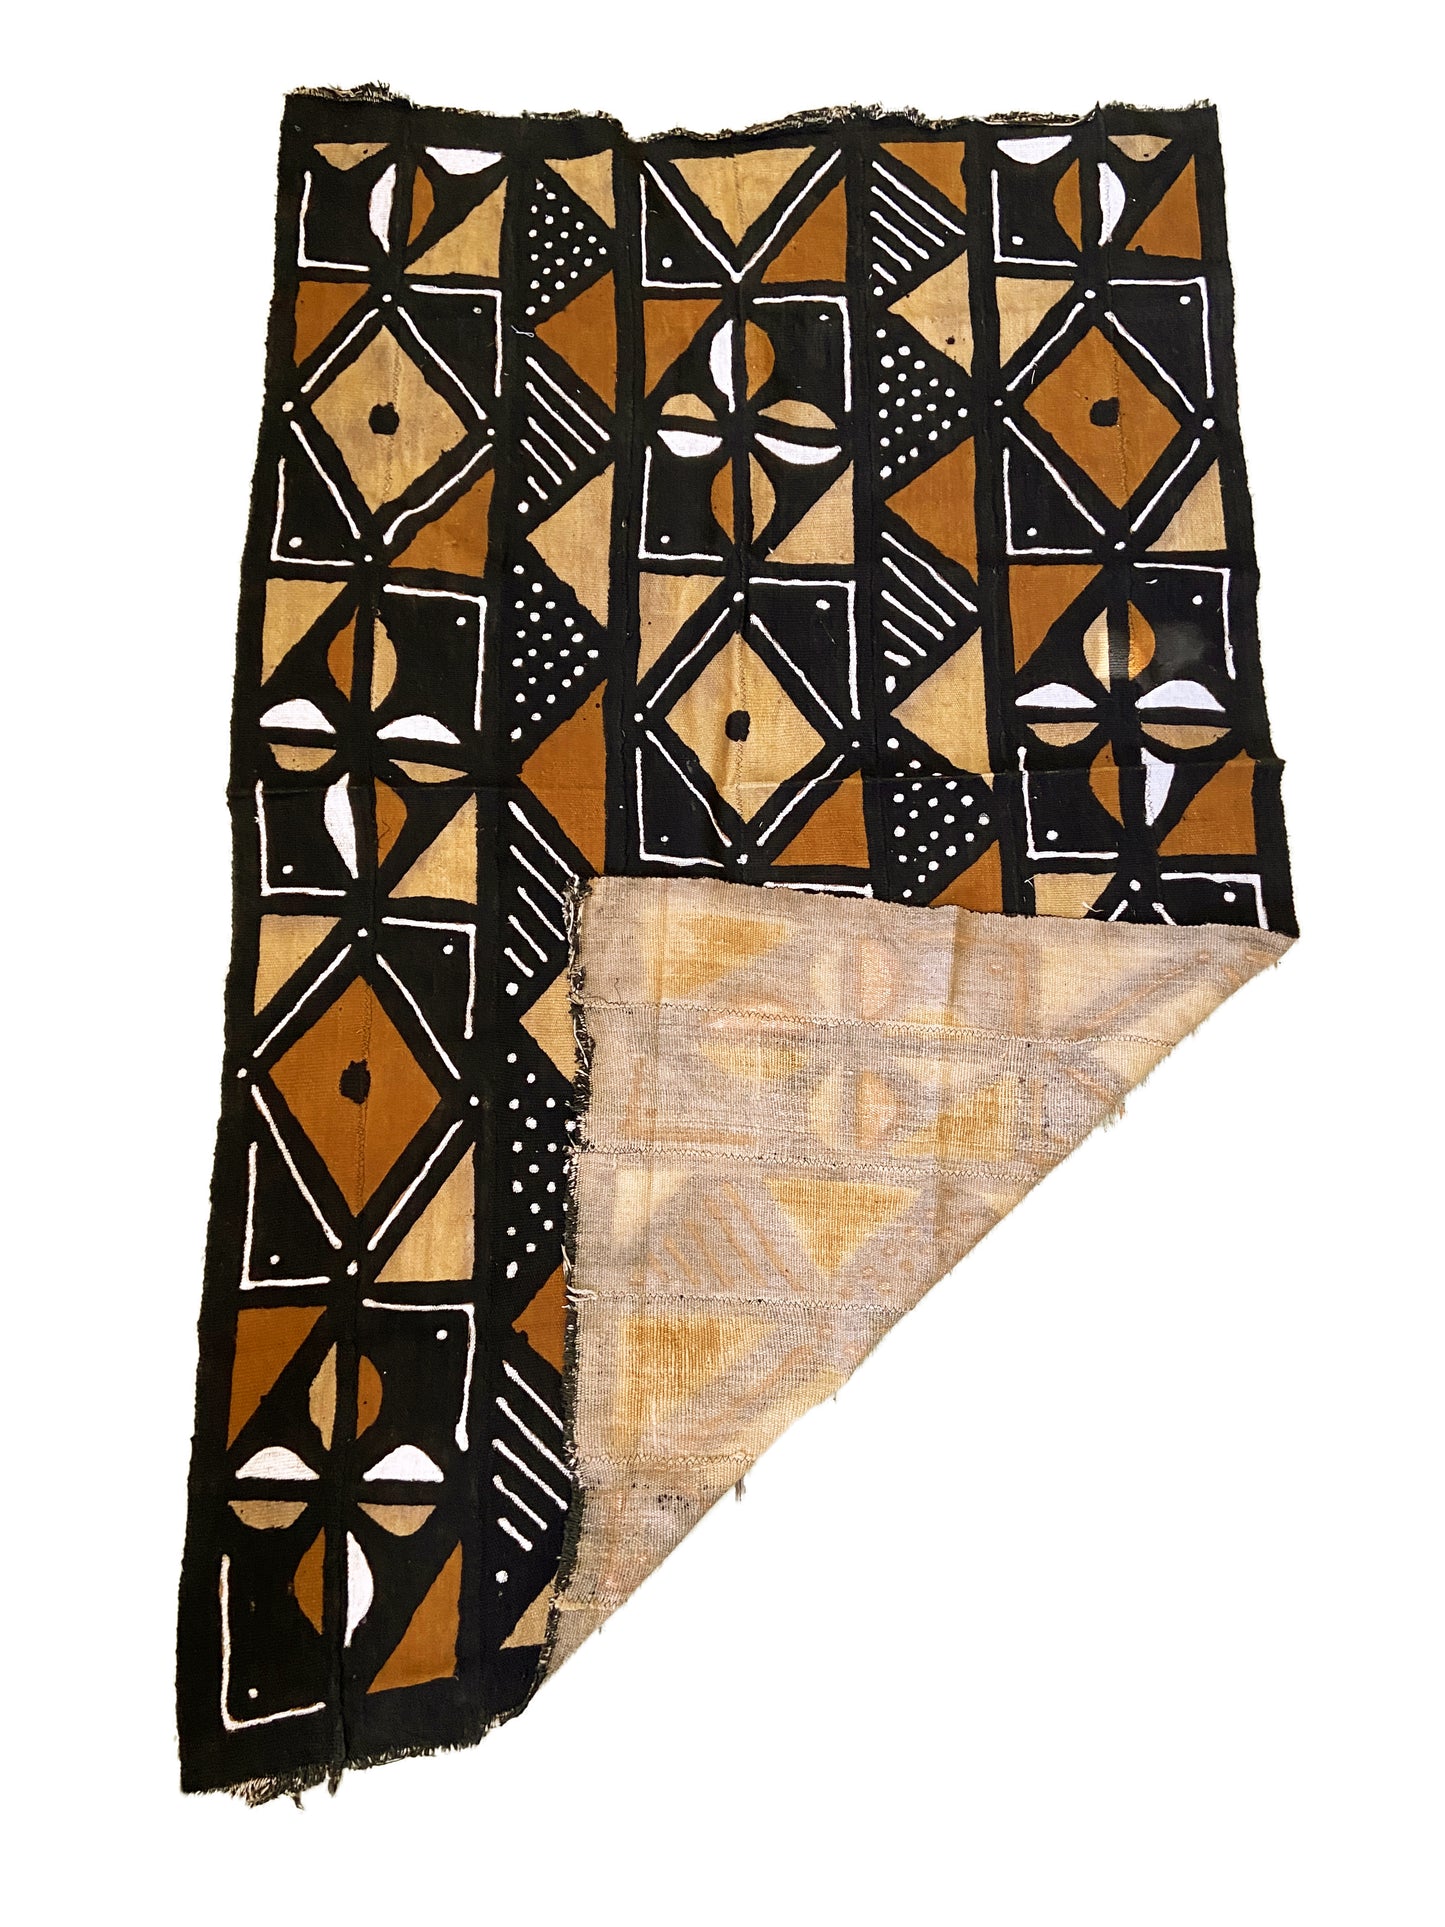 African Brown/Mustard/Black/White Mud Cloth Mali  40" By 67" #3575